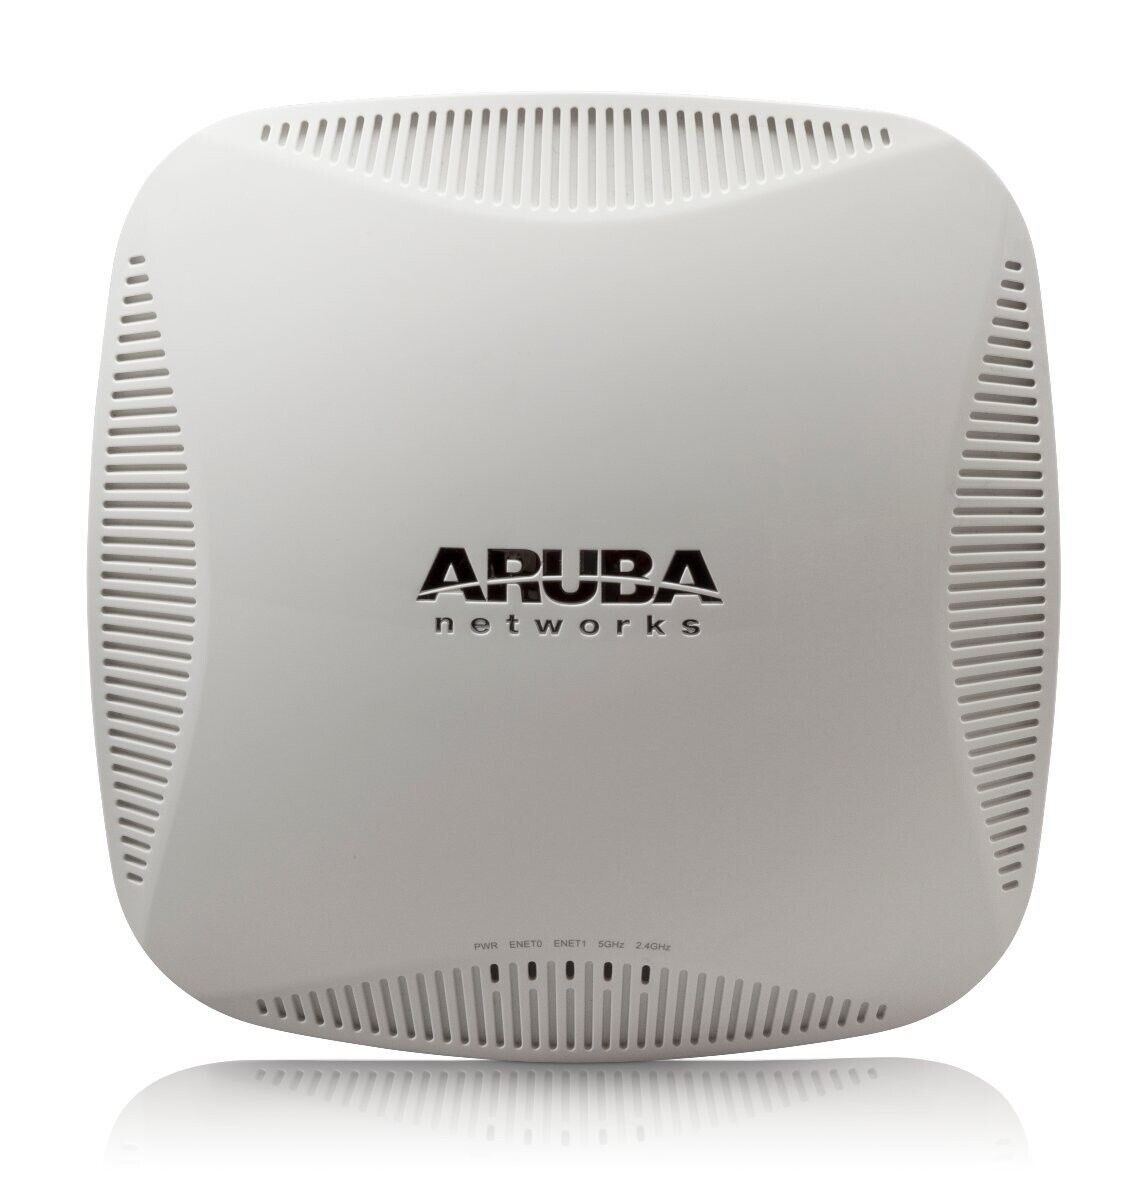 ** Lot of 10 ** Aruba Networks AP-225 Access Point APIN0225 JW174A